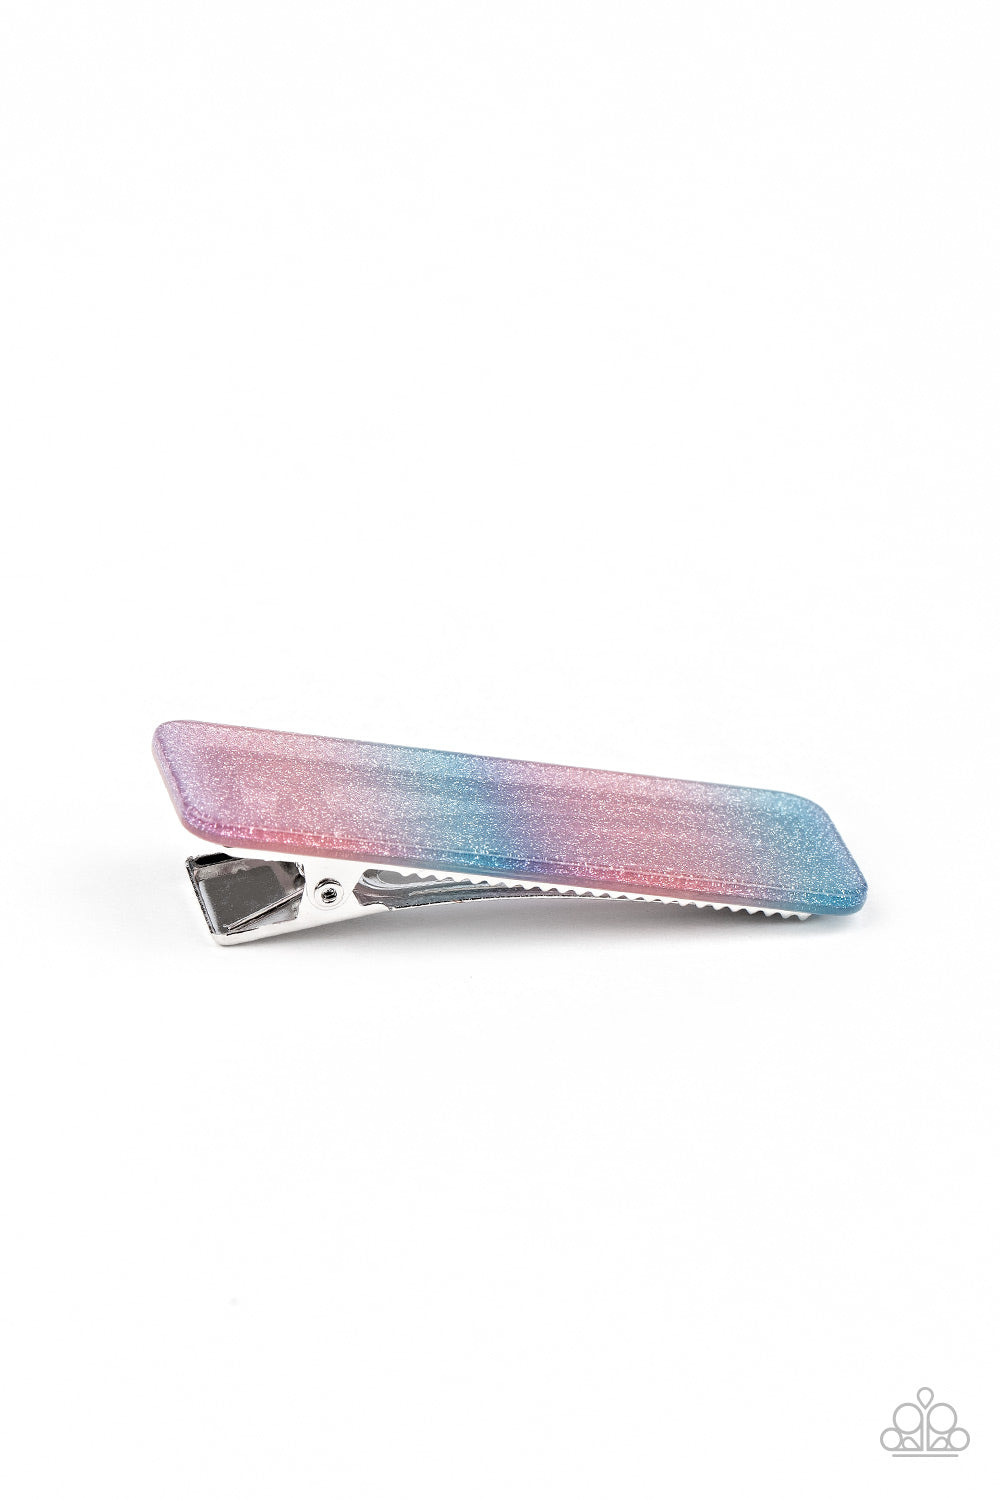 Stellar Rainbows Hair Clip (Multi, Pink)